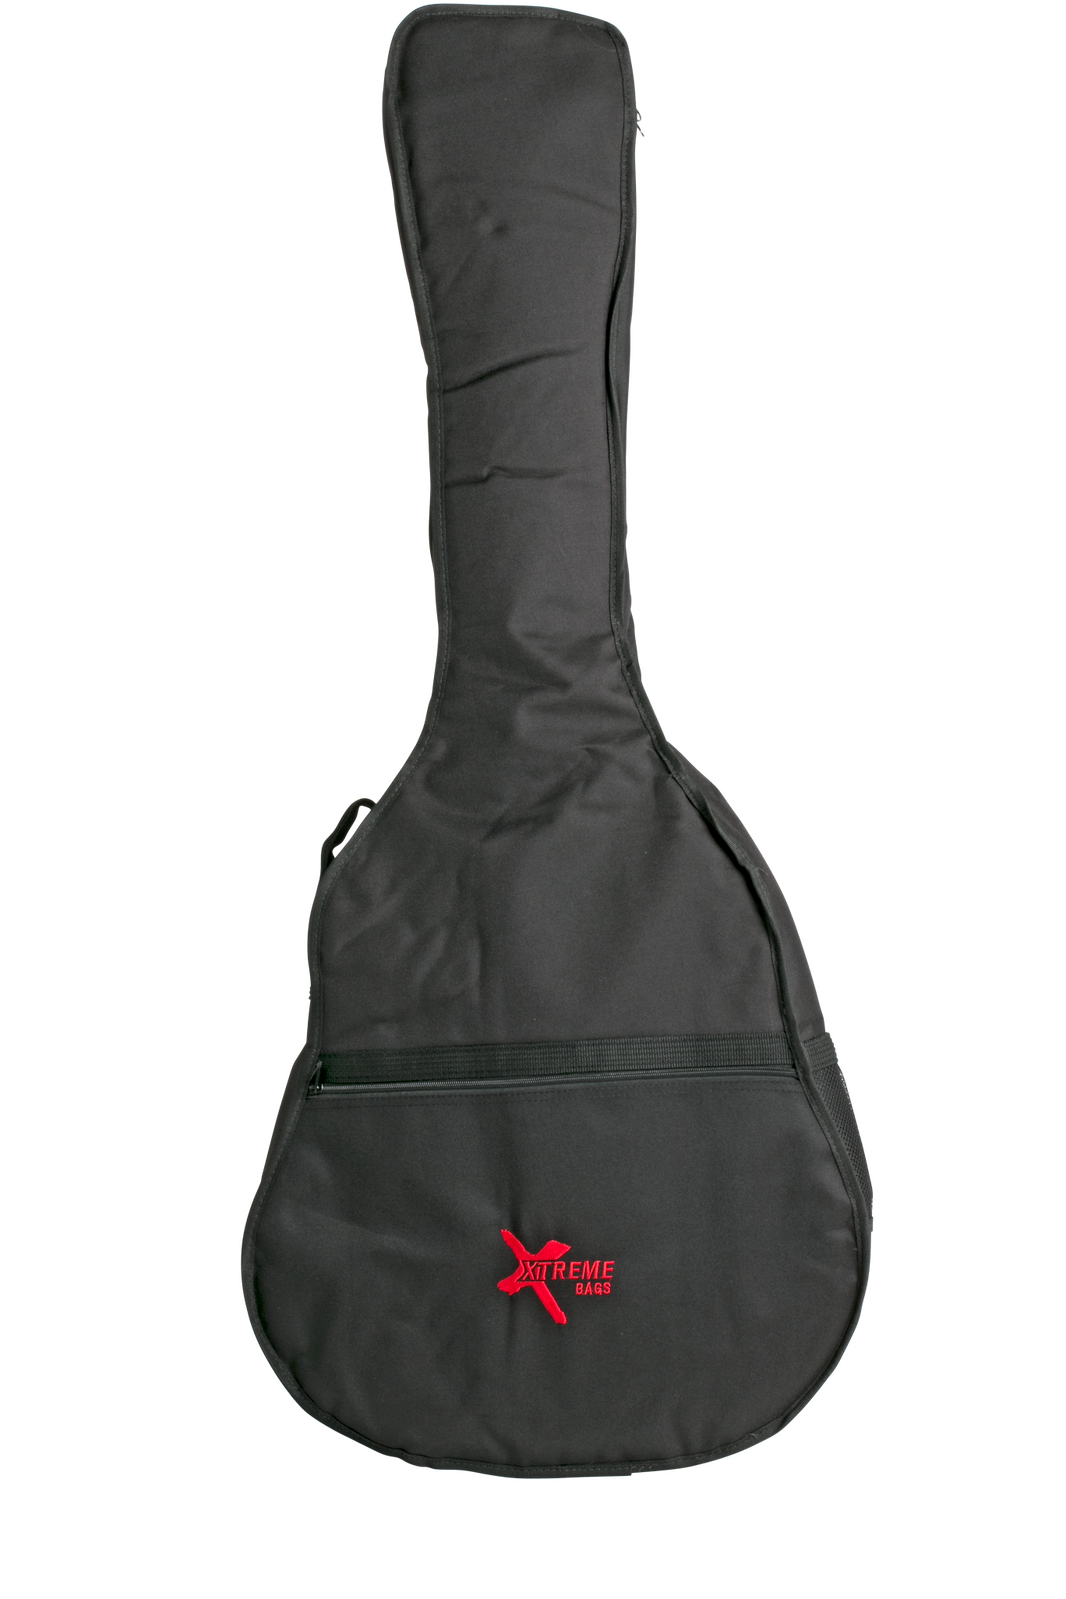 Xtreme 3/4 Size Classical Guitar Bag